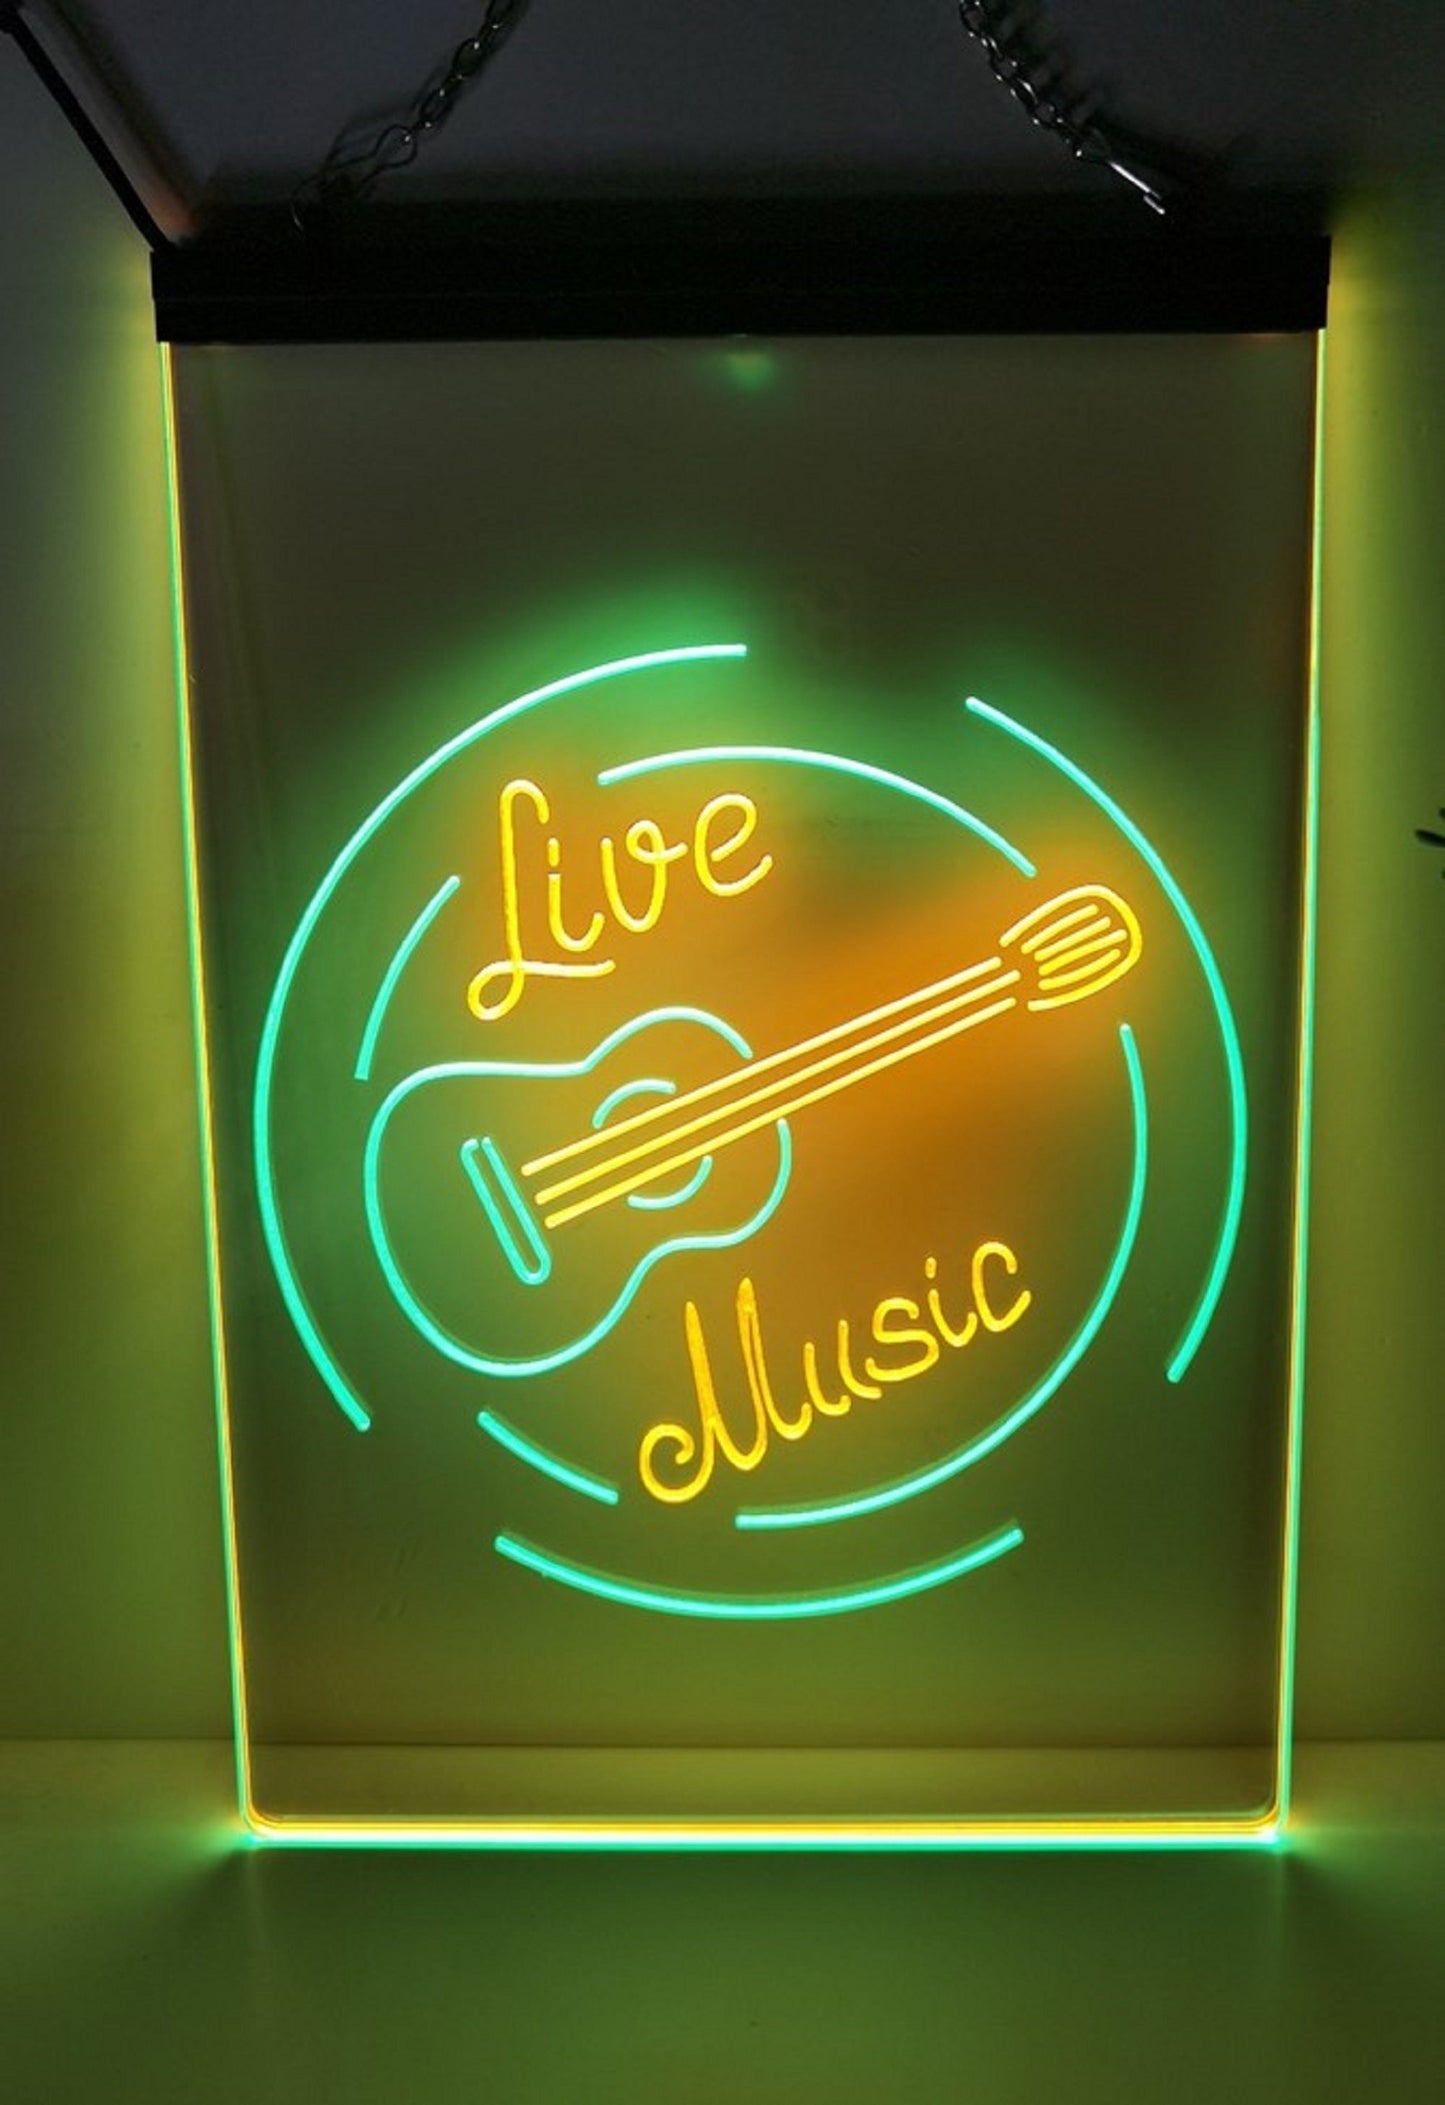 Neon Sign Dual Color Live Music Guitar Home Studio Wall Desktop Decor